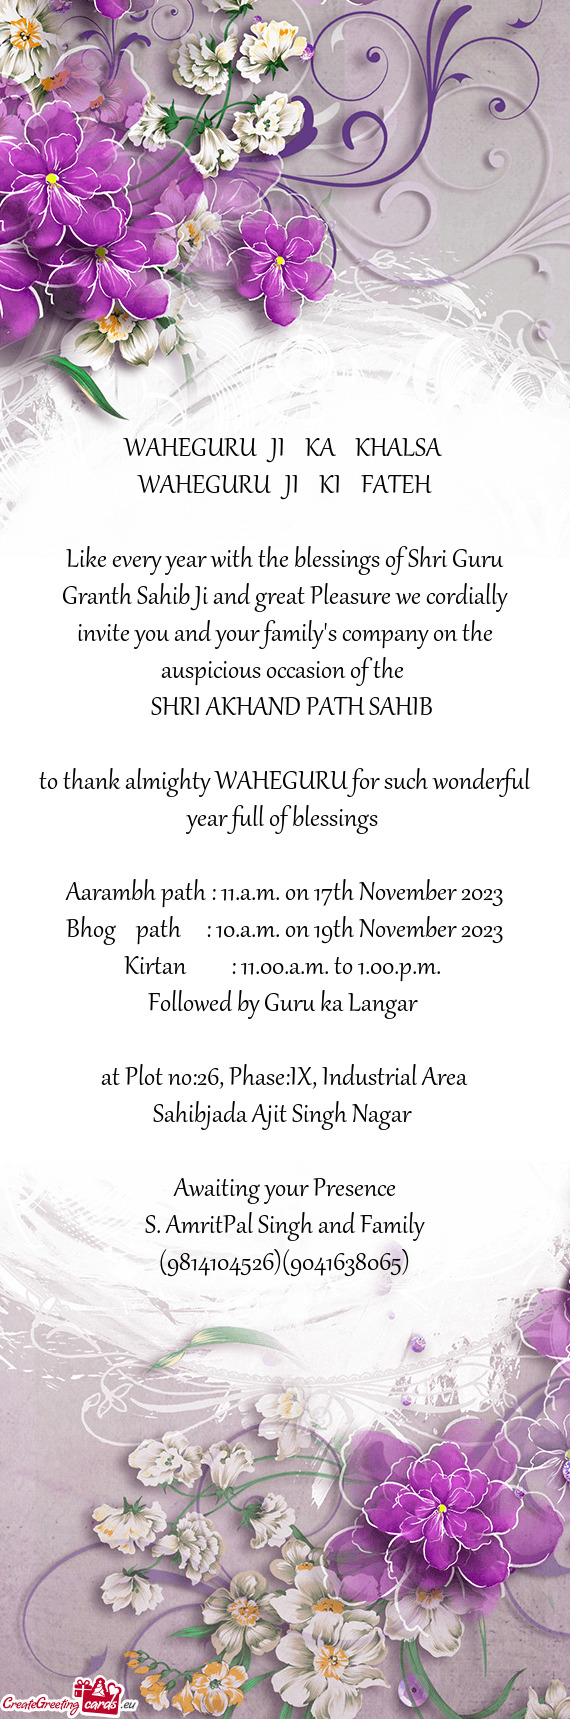 Like every year with the blessings of Shri Guru Granth Sahib Ji and great Pleasure we cordially invi